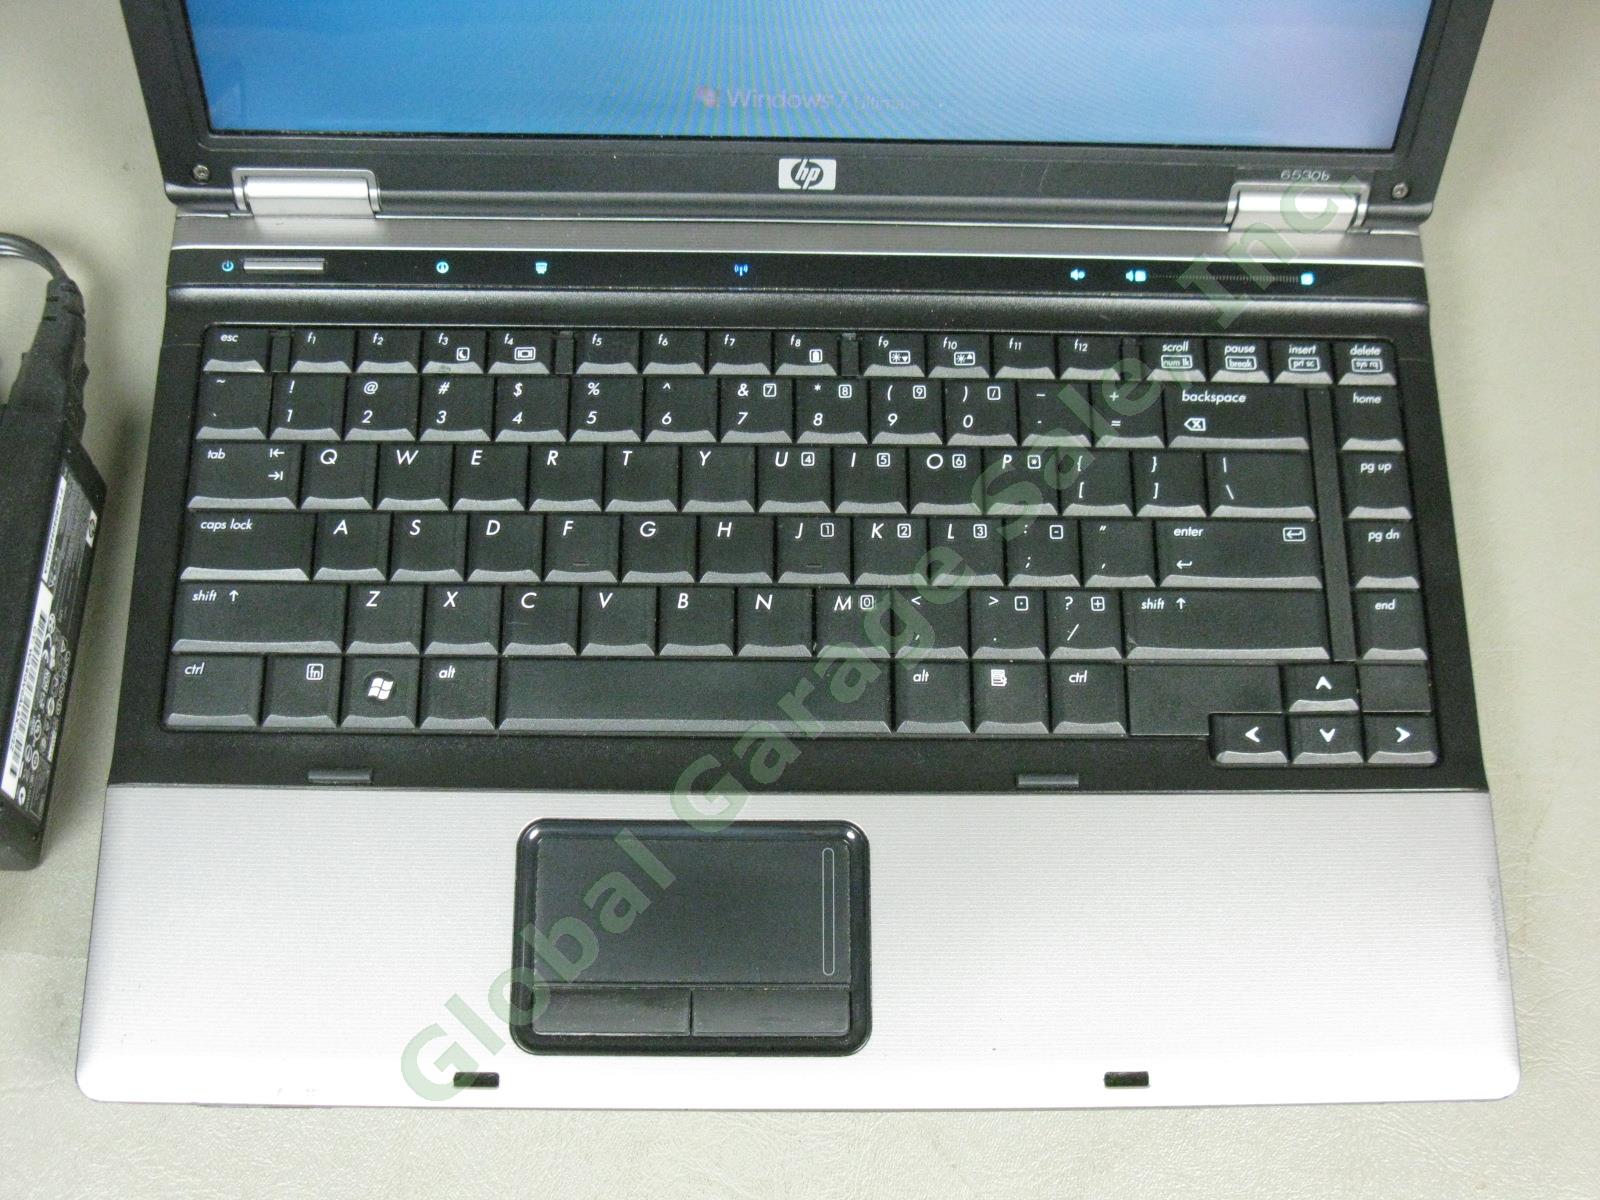 HP 6530b Laptop Computer Intel Core 2 Duo 2.40GHz 4GB 160GB Windows 7 Ultimate 2